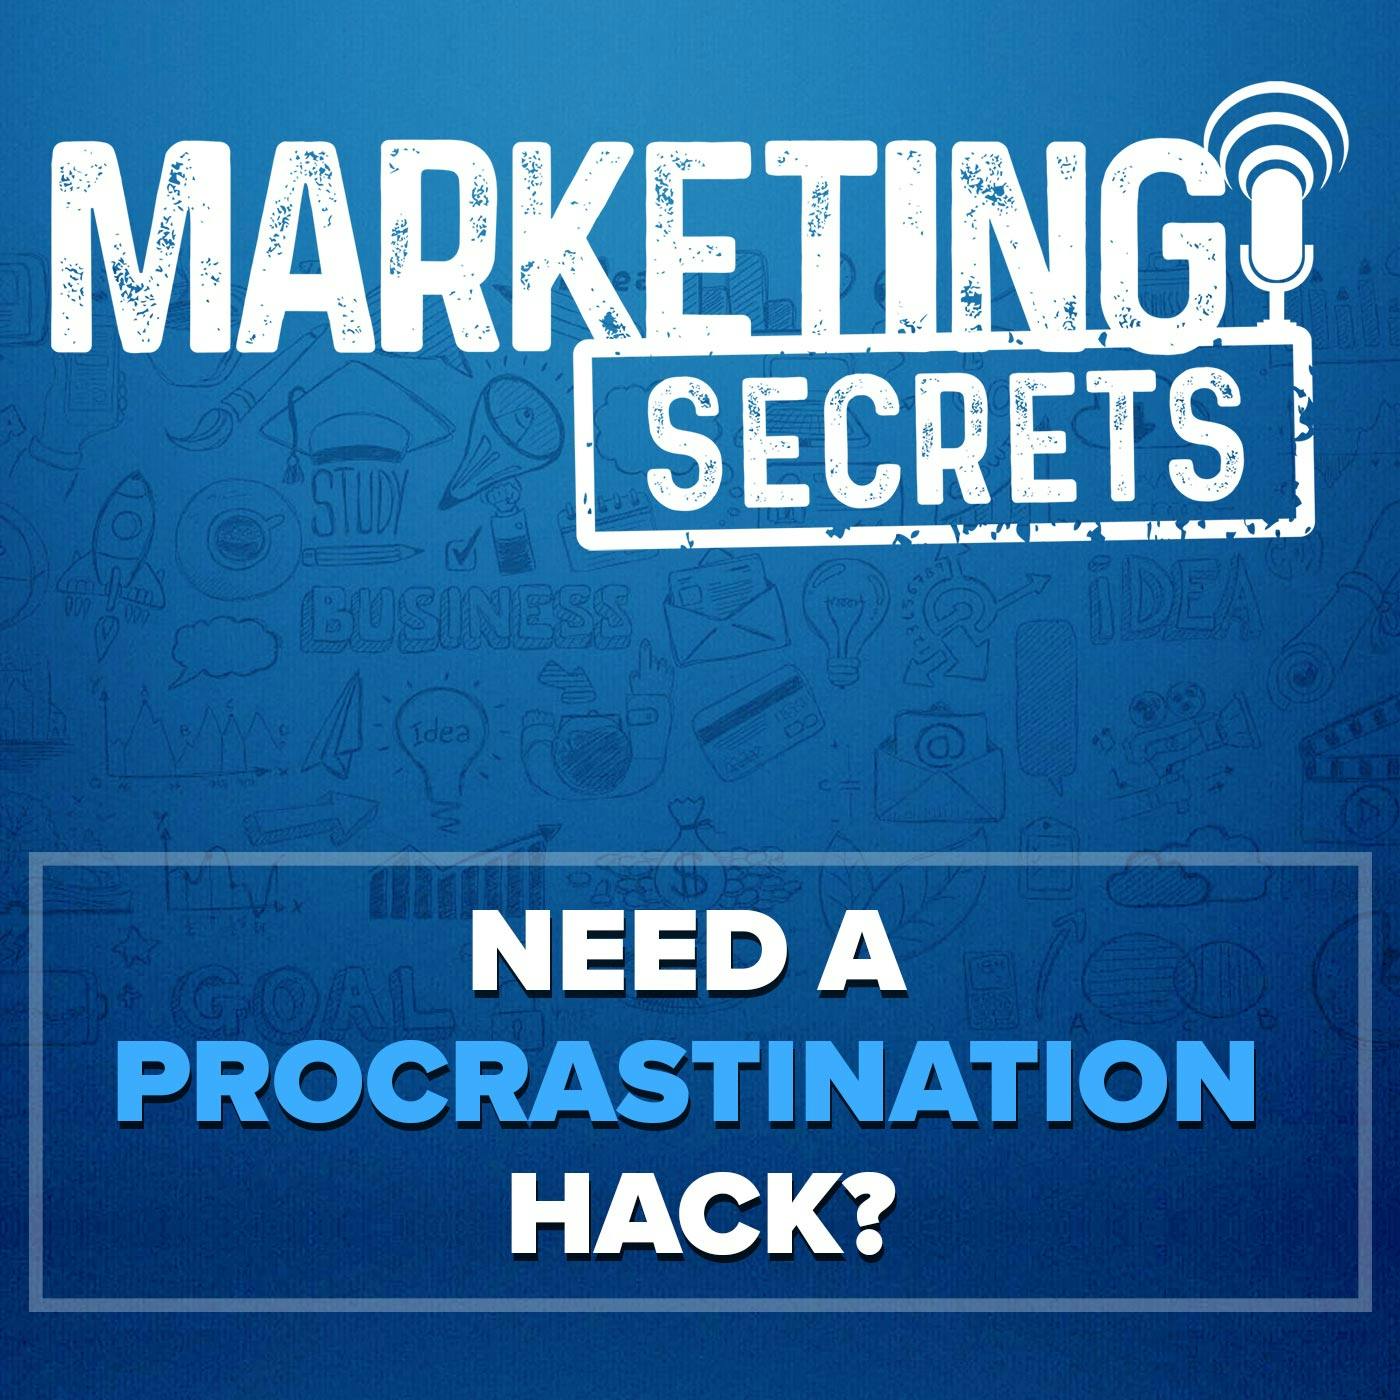 Need A Procrastination Hack?